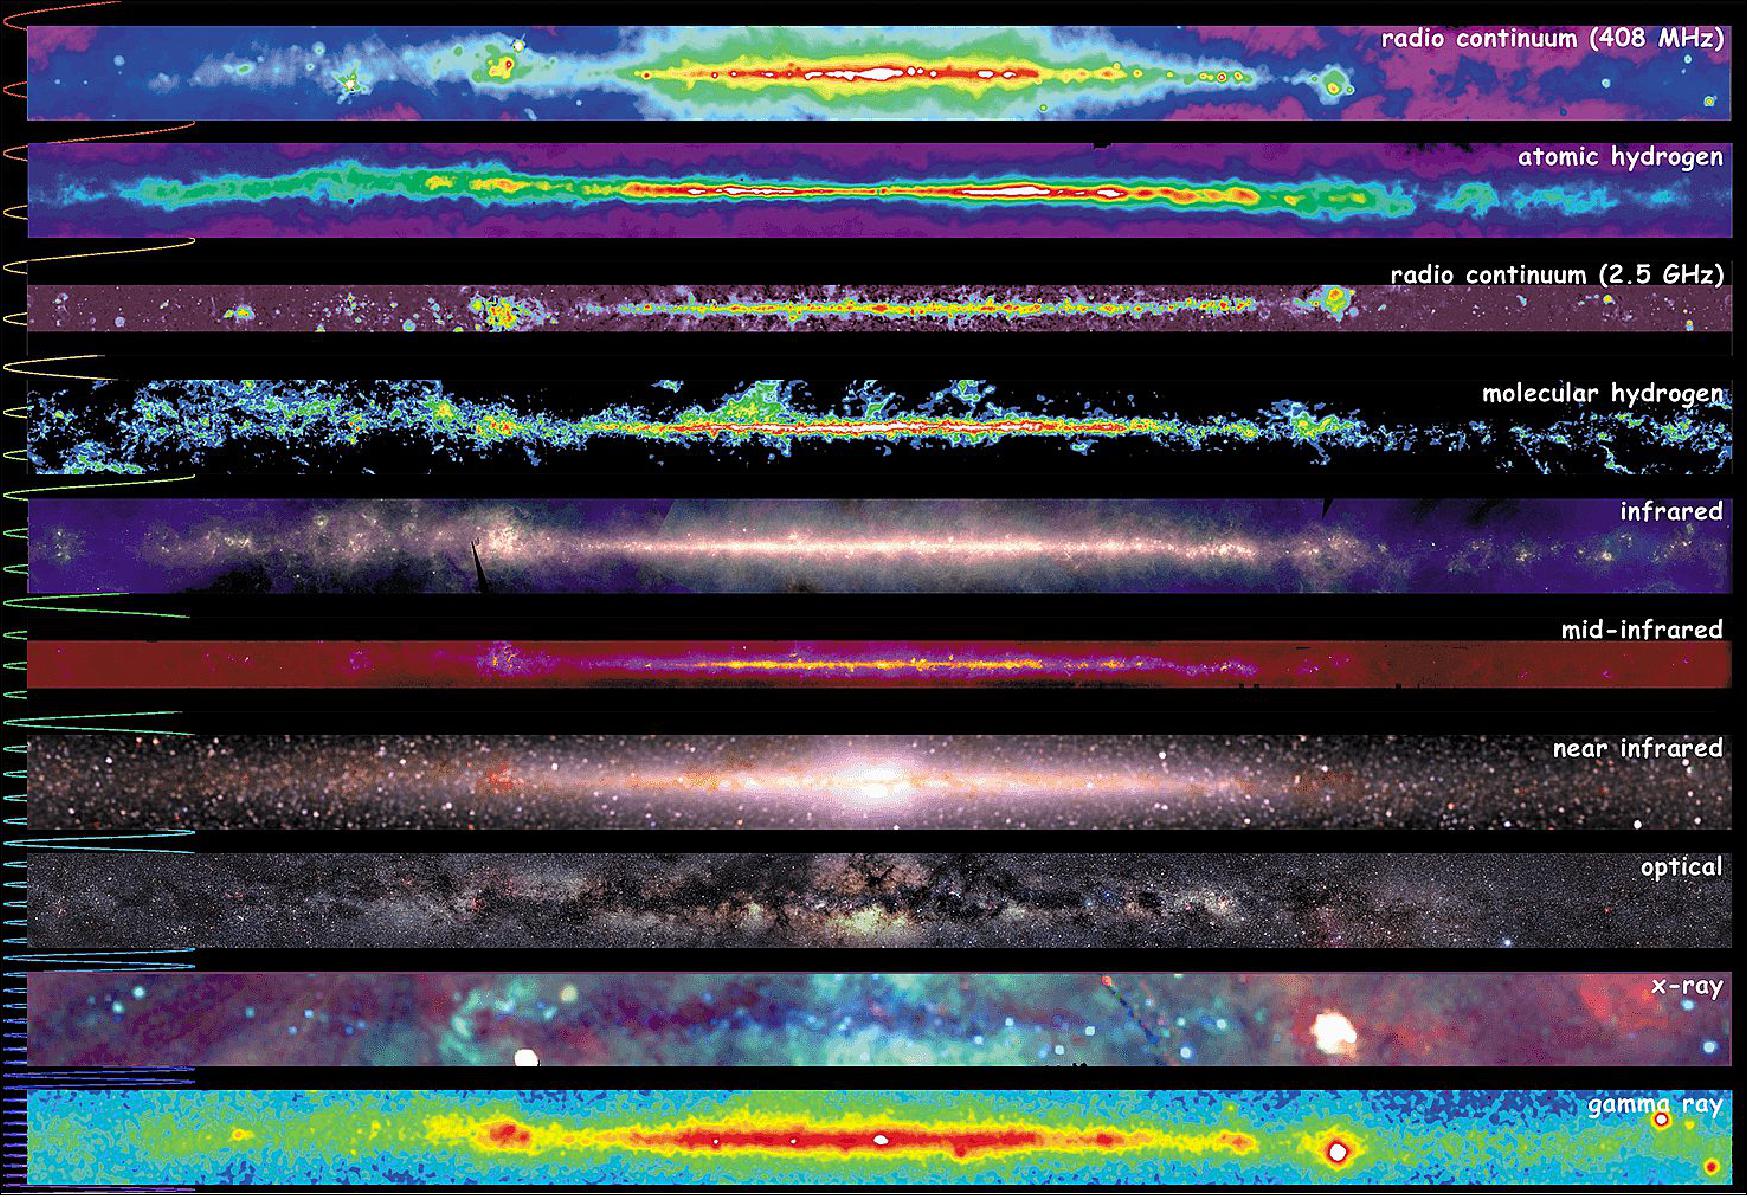 Figure 4: The multiwavelength Milky Way (image credit: NASA)